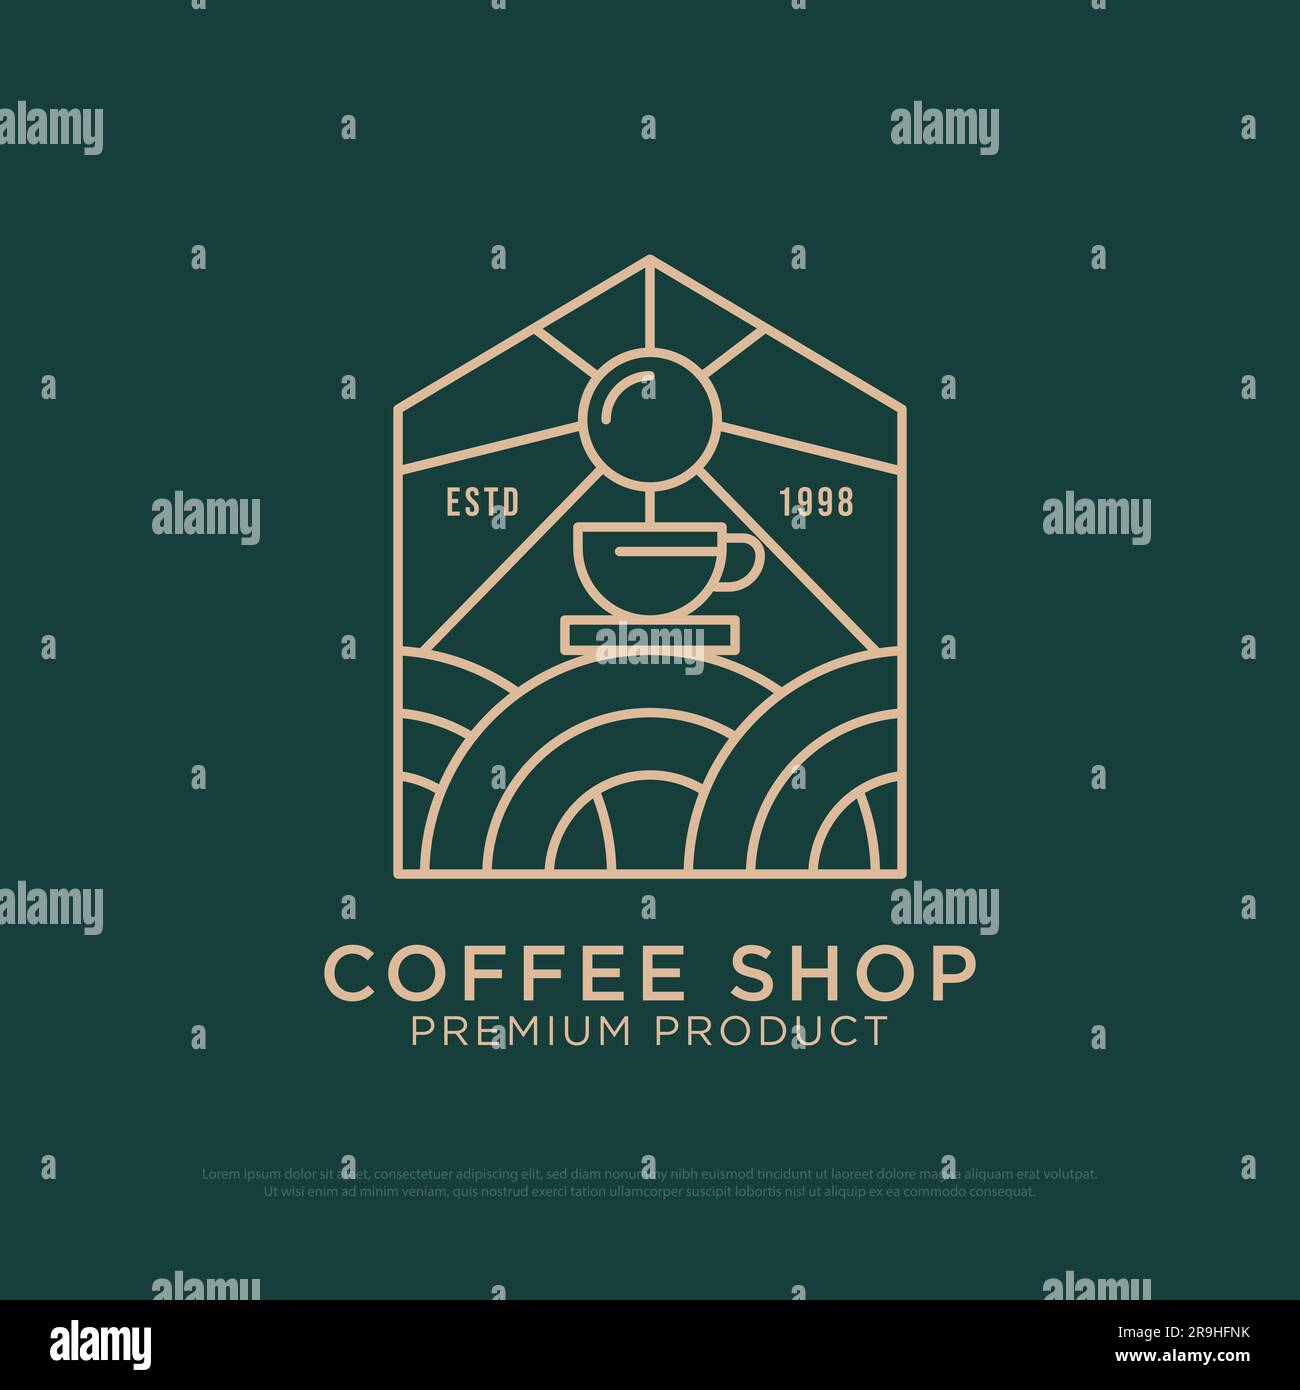 Morning Coffee shop logo design vector, vintage Outdoor coffee logo illustration with outline style, best for restaurant, cafe, beverages logo brand Stock Vector